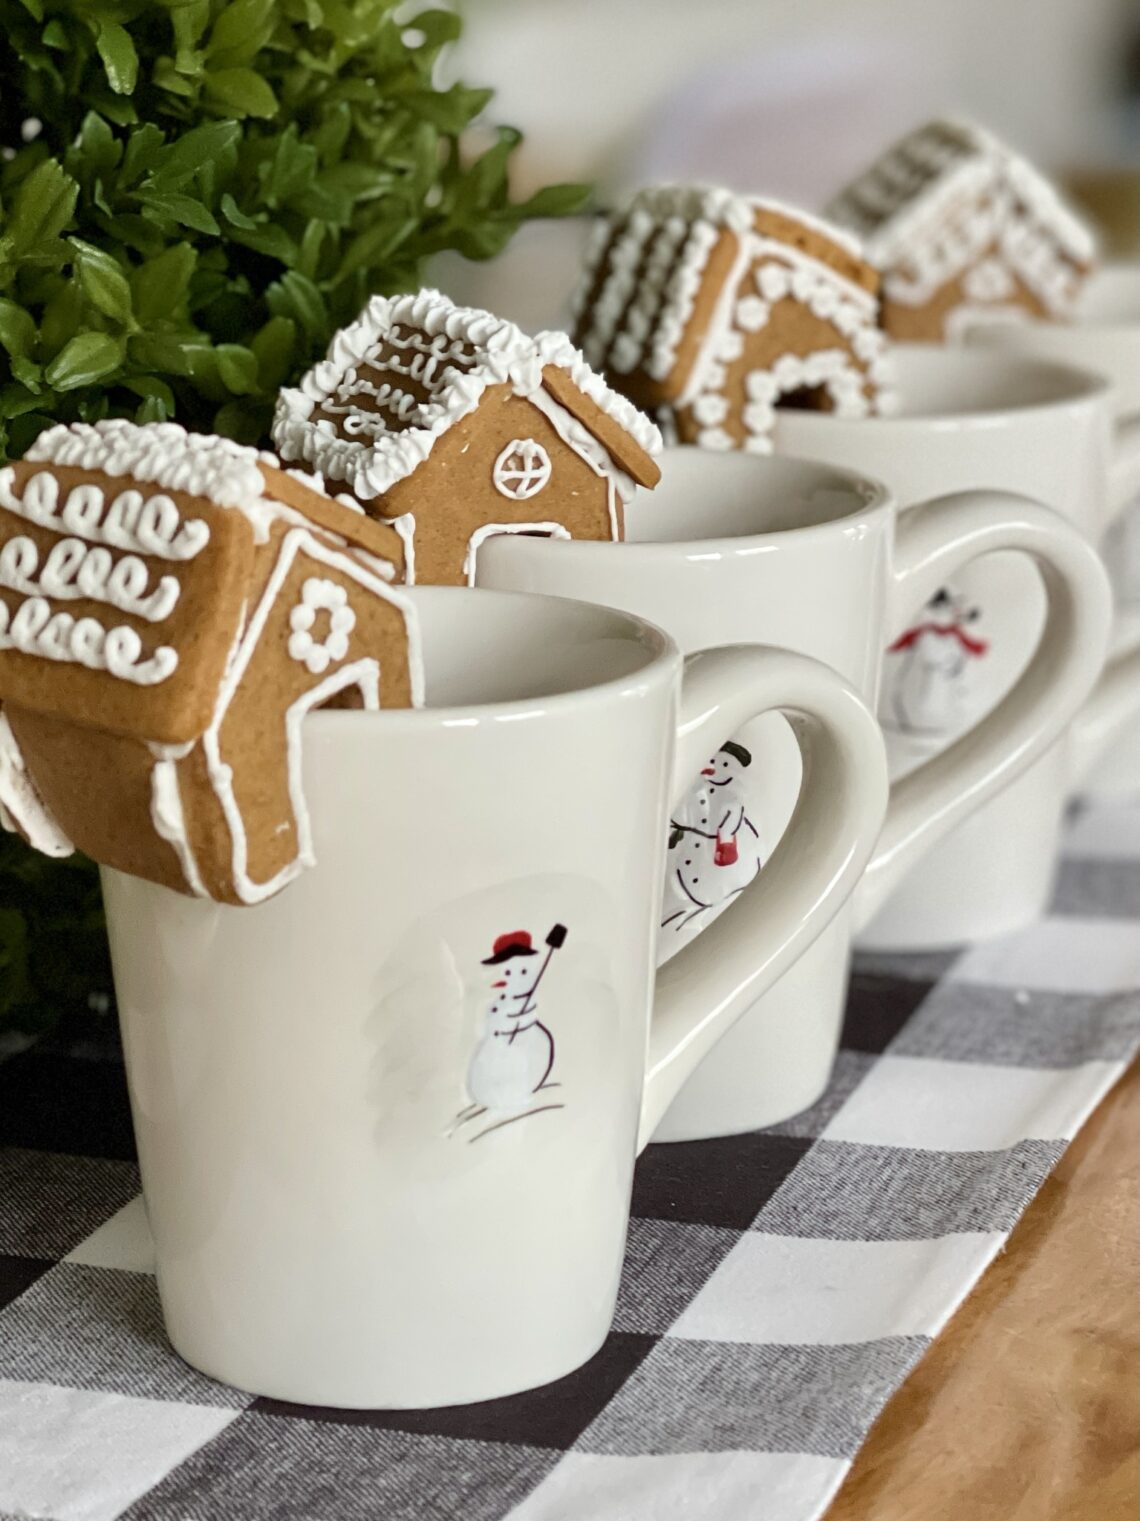 gingerbread houses on hot chocolate mugs